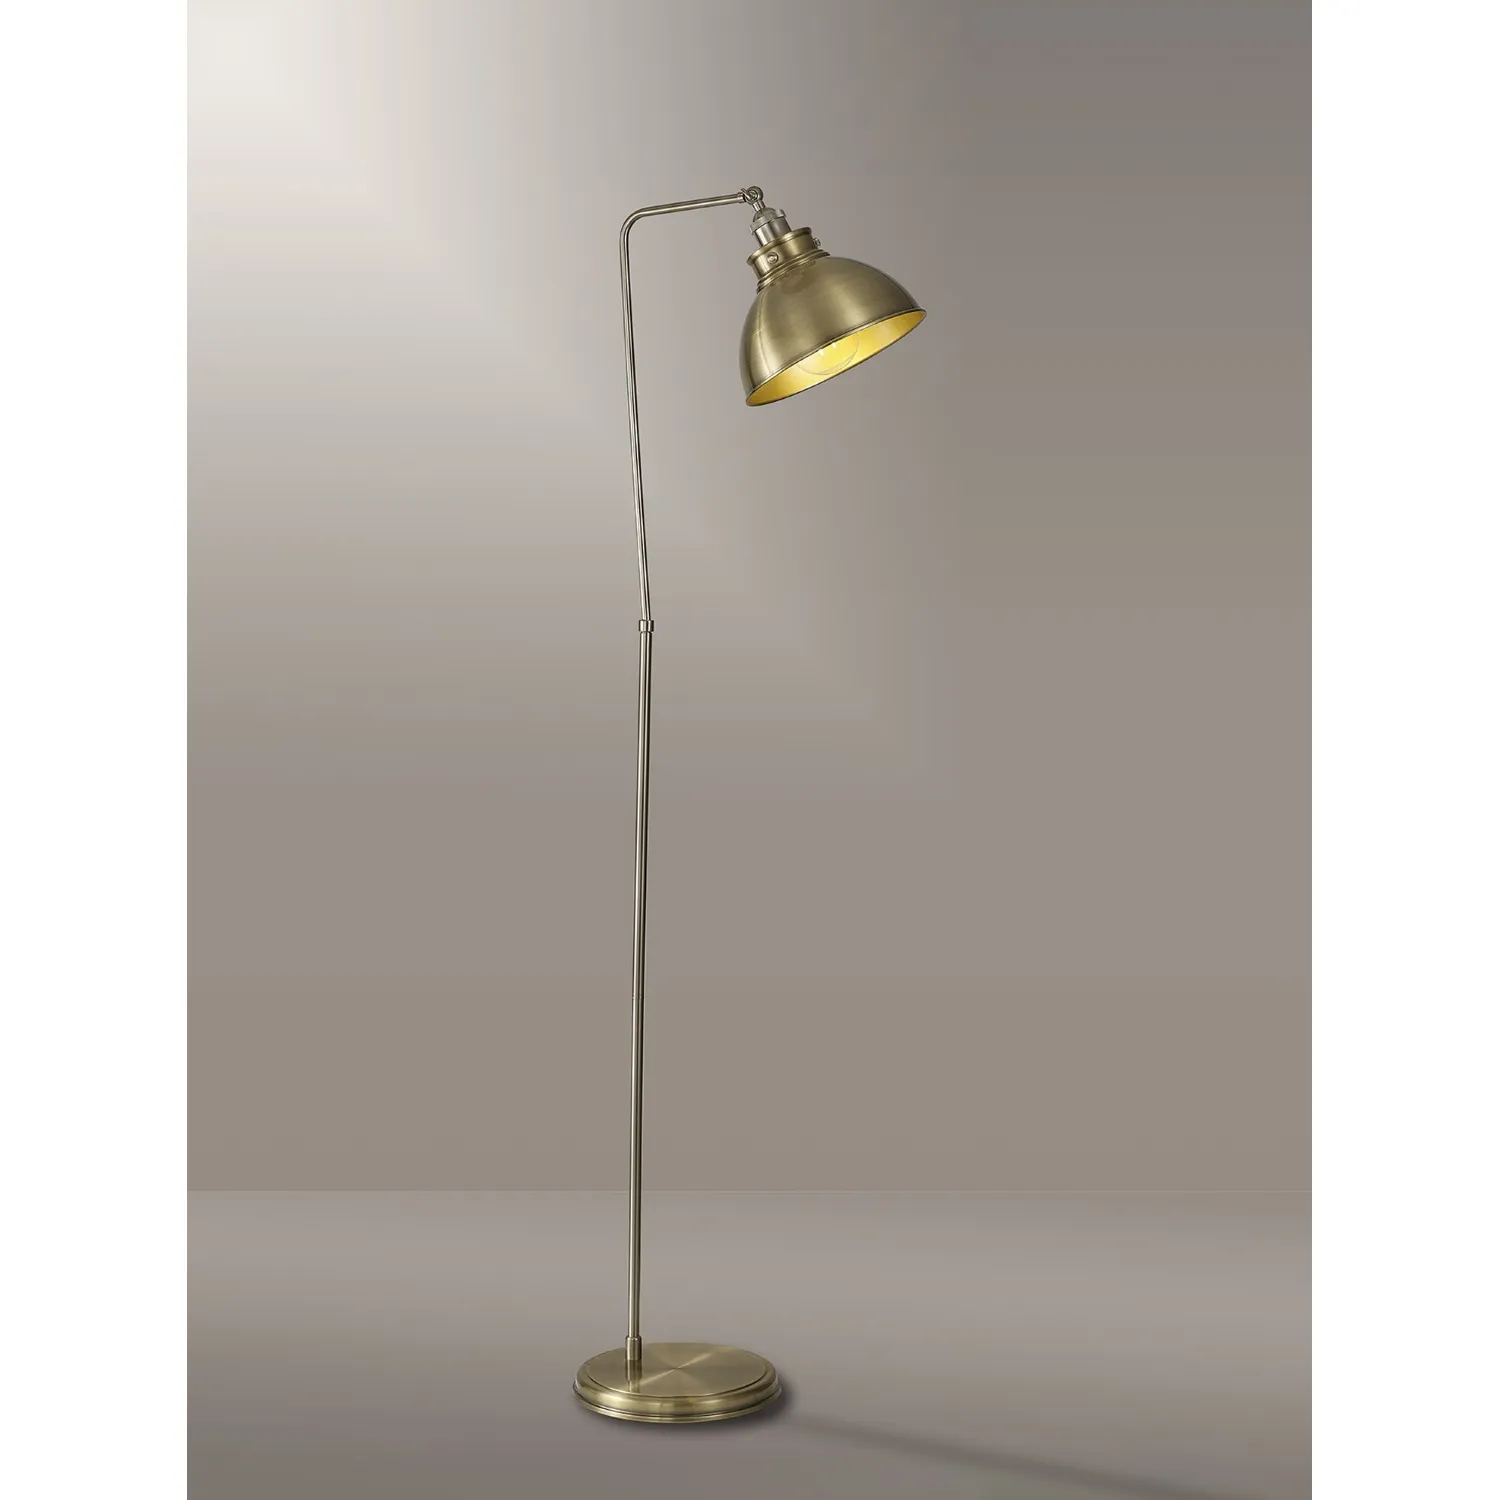 Savoy Adjustable Floor Lamp, 1 x E27, Satin Nickel Antique Brass Gold